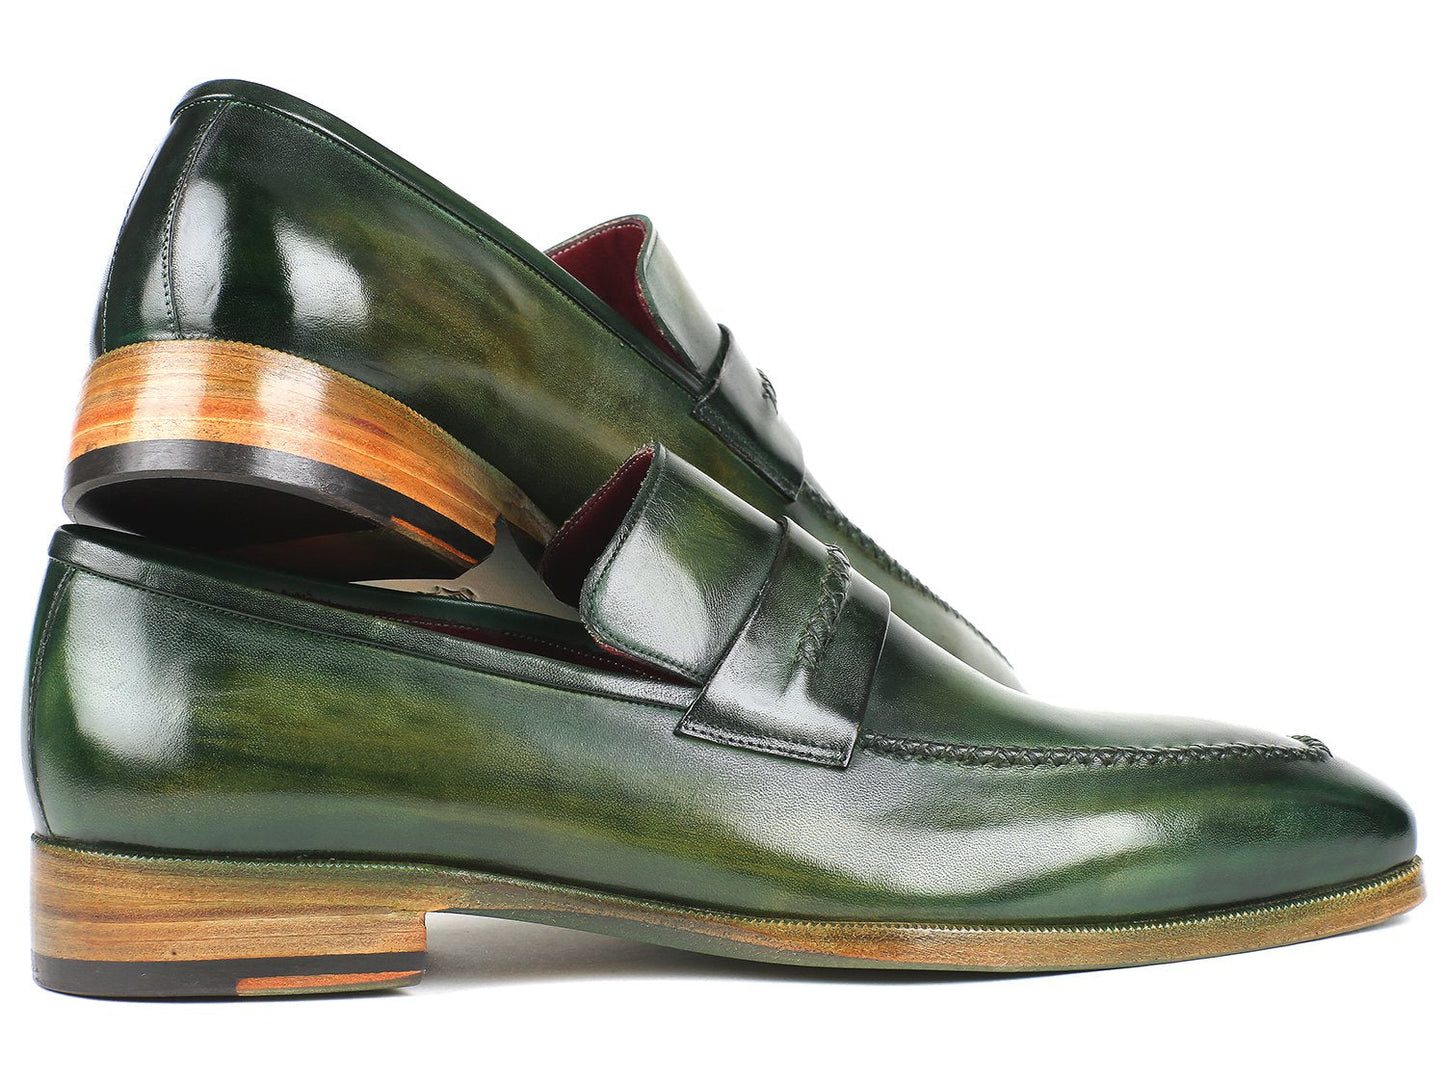 Paul Parkman Men's Loafer Shoes Green (ID#068-GRN)